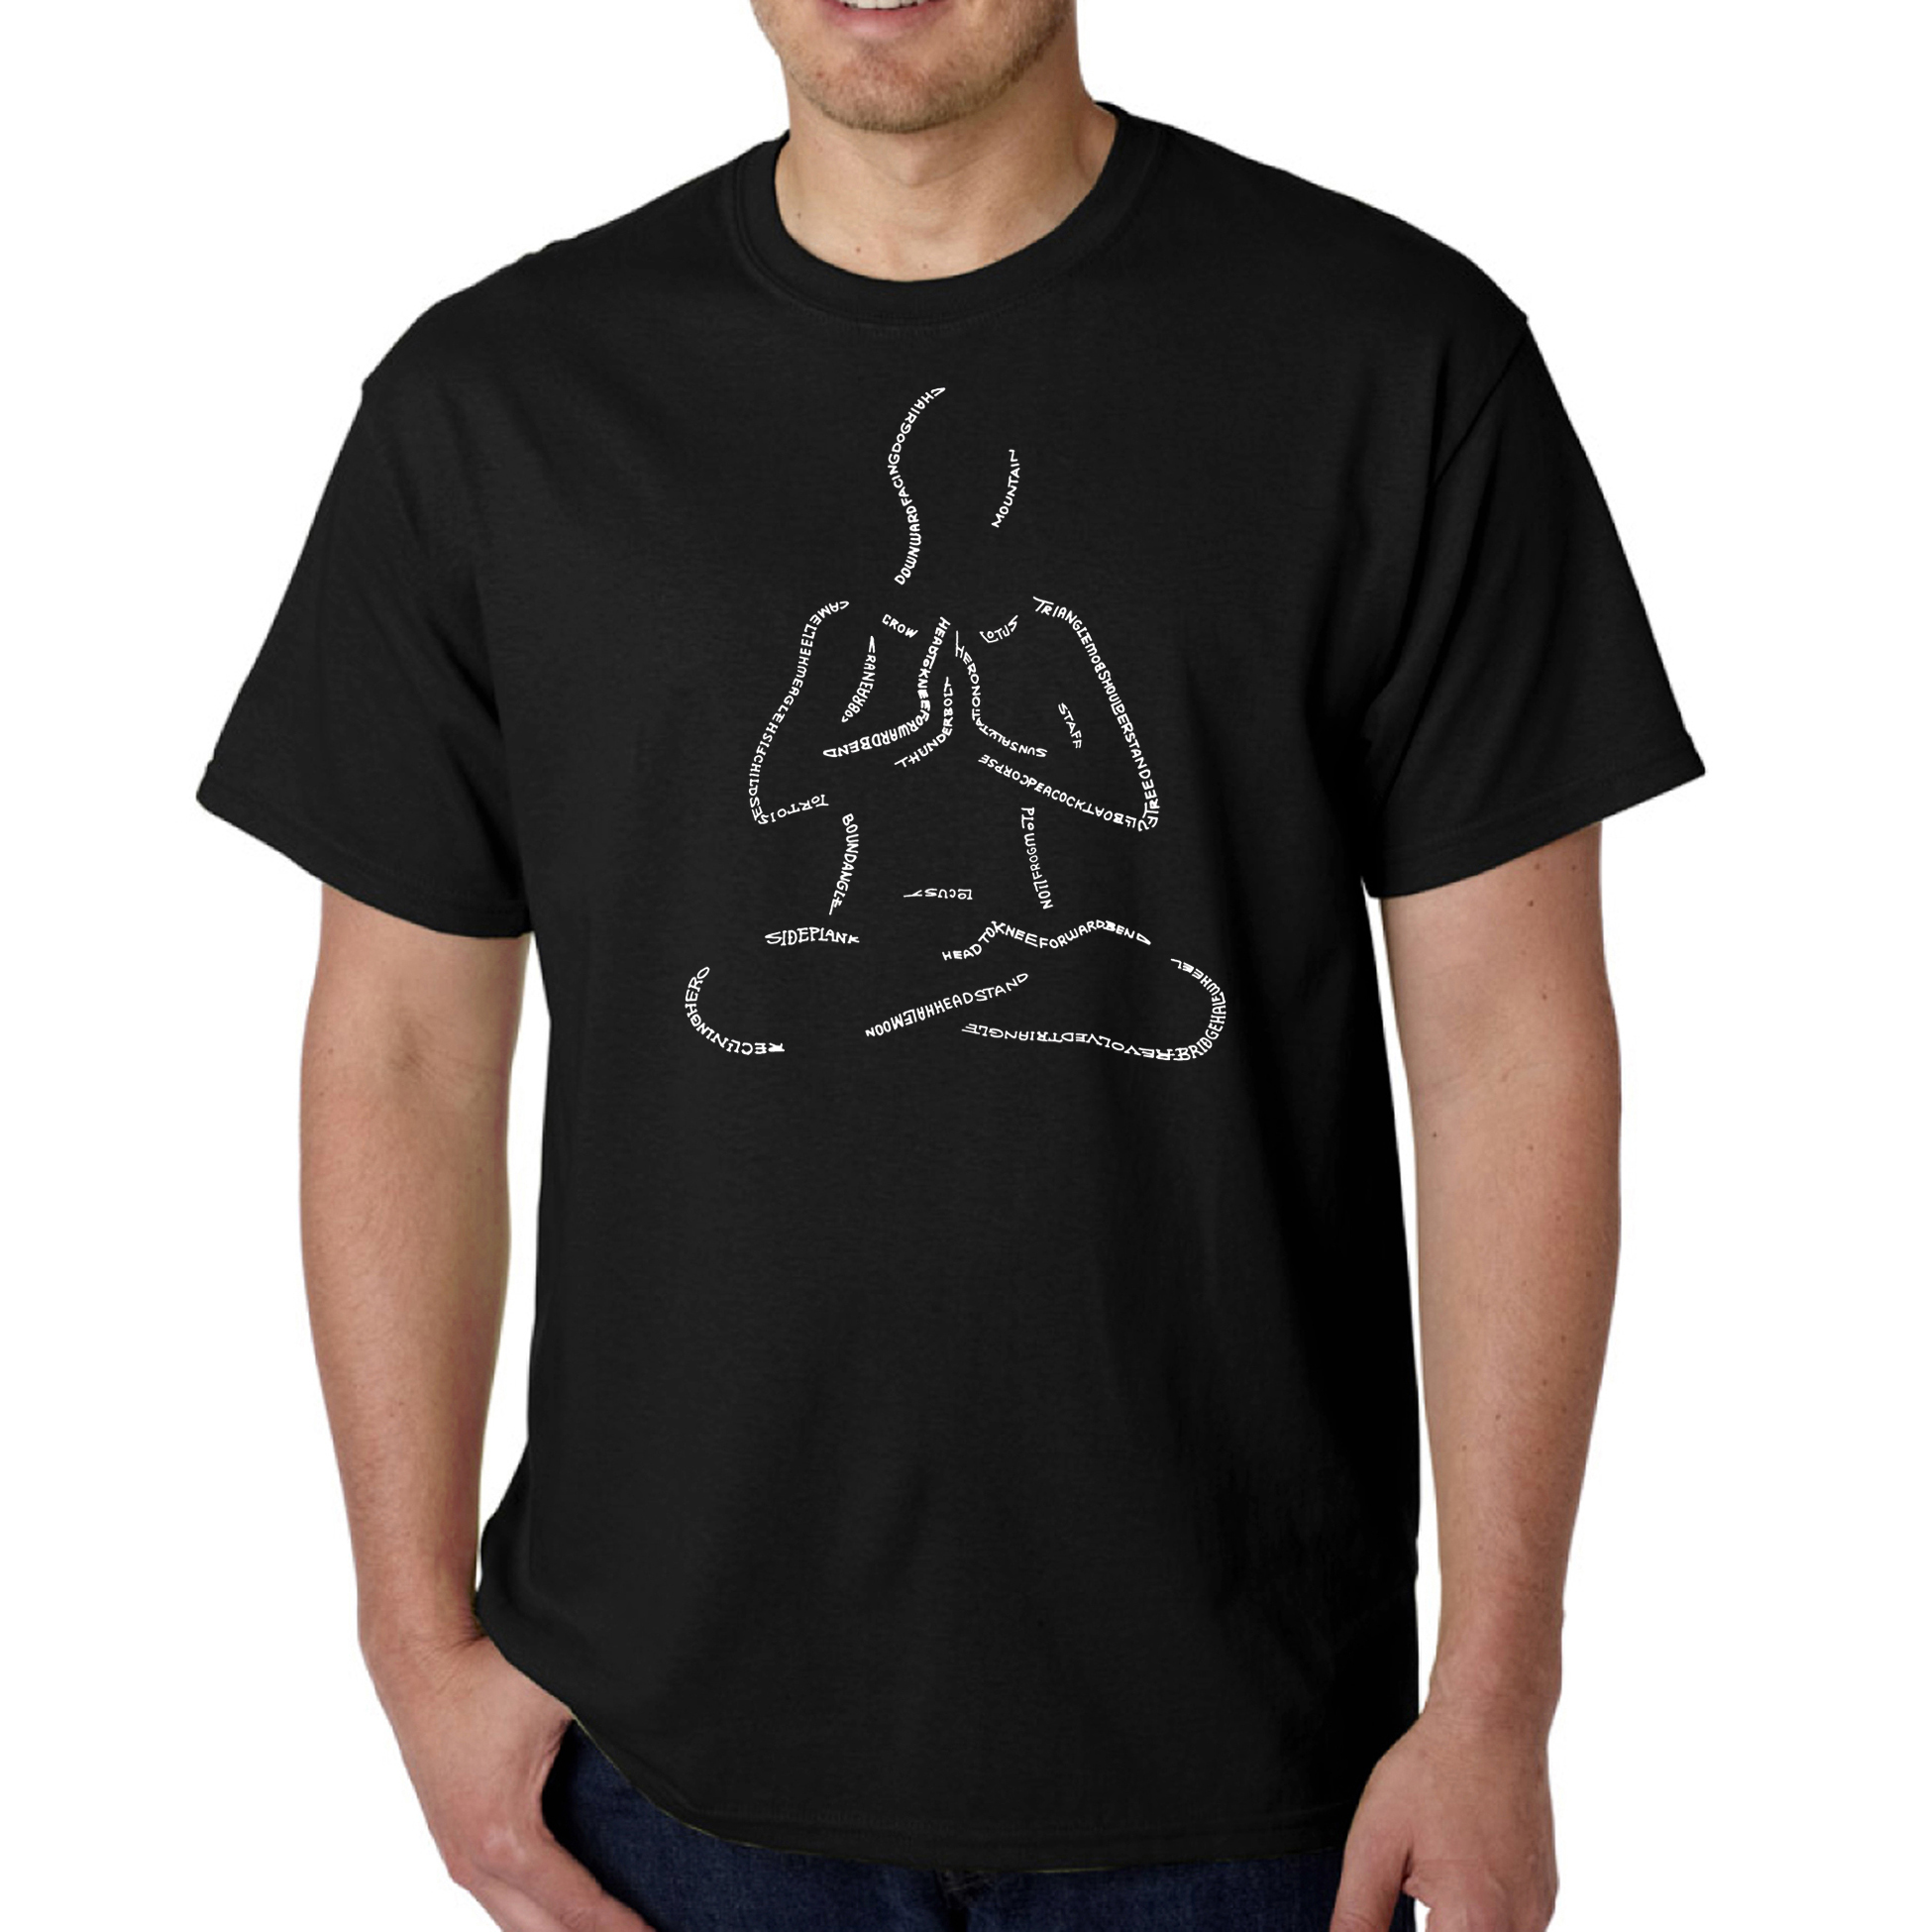 Los Angeles Pop Art Men's Word Art T-Shirt - Popular Yoga Poses